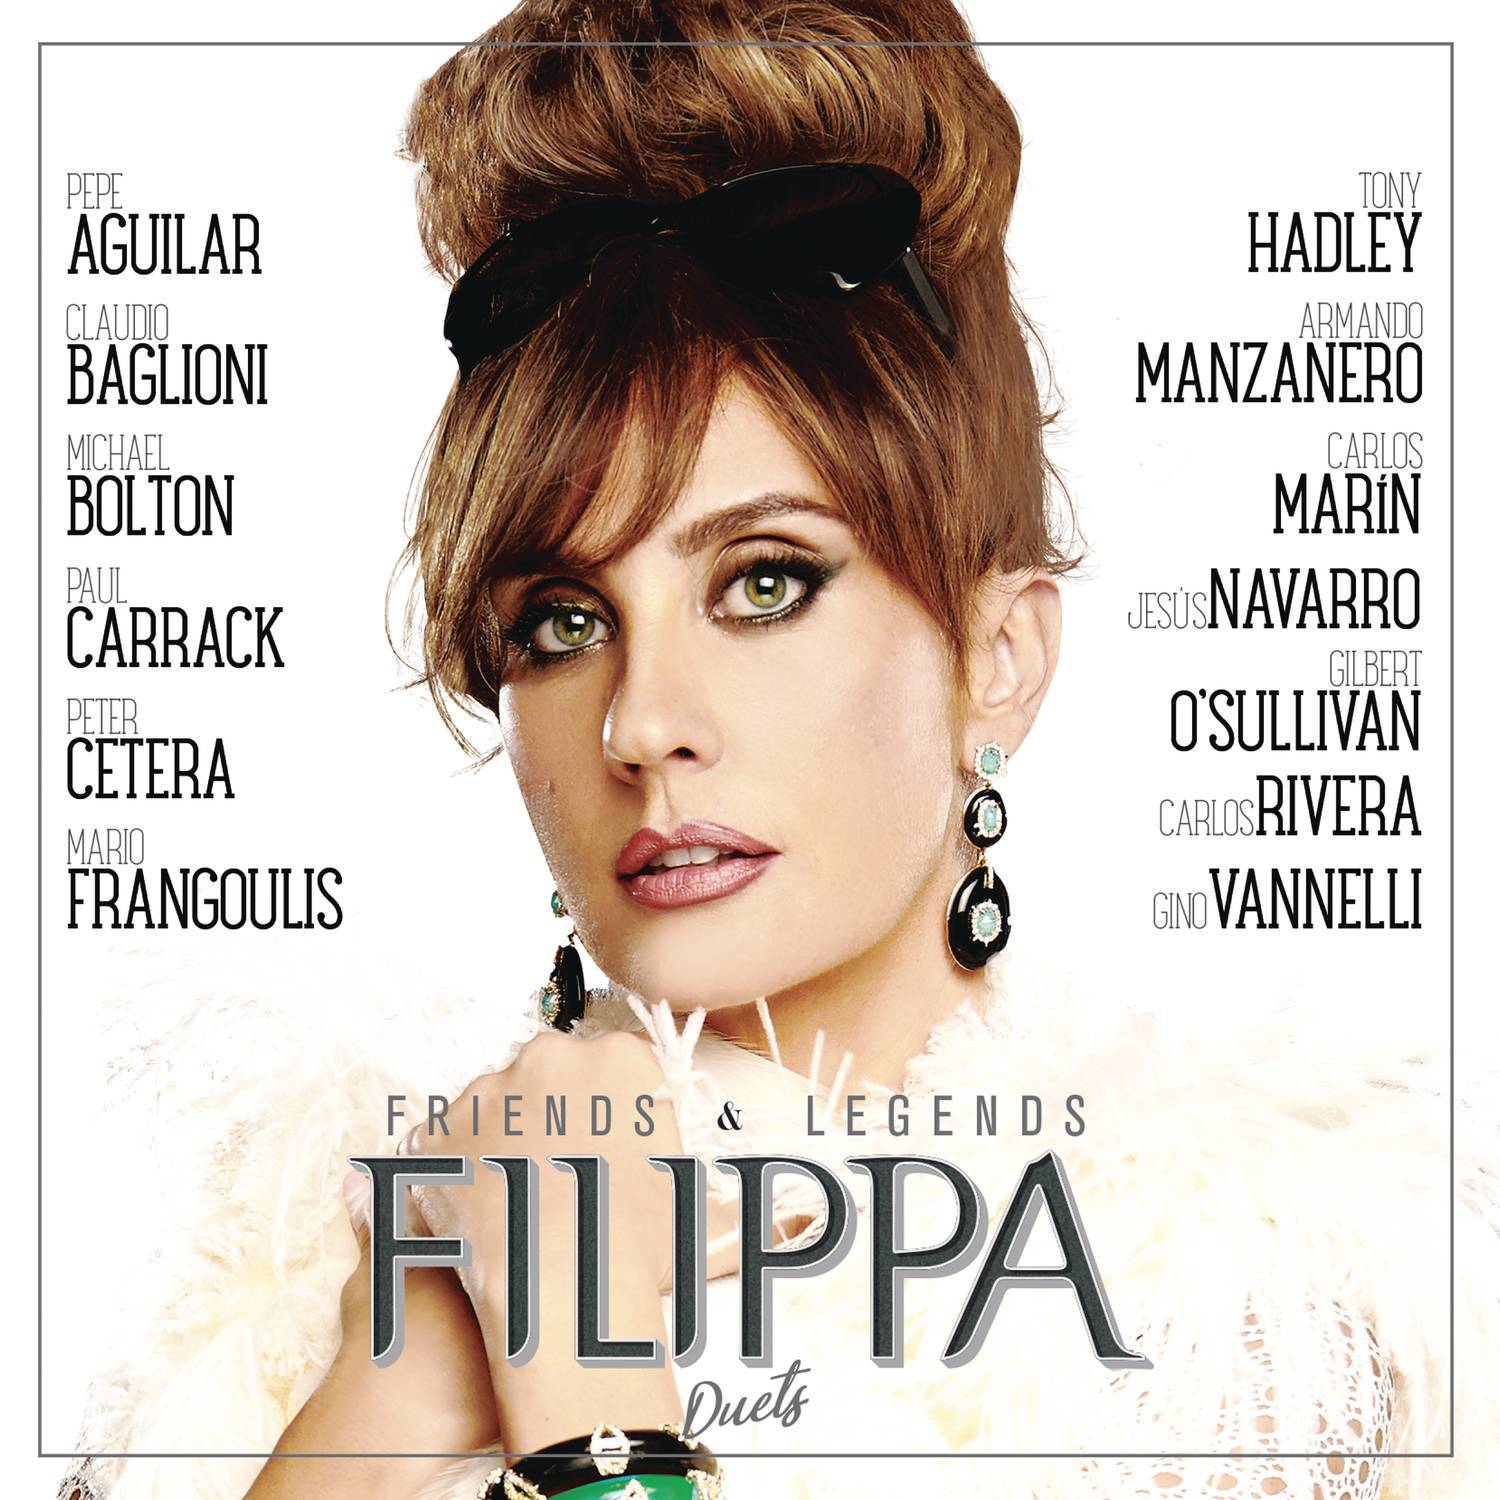 Filippa Giordano - Endless Love